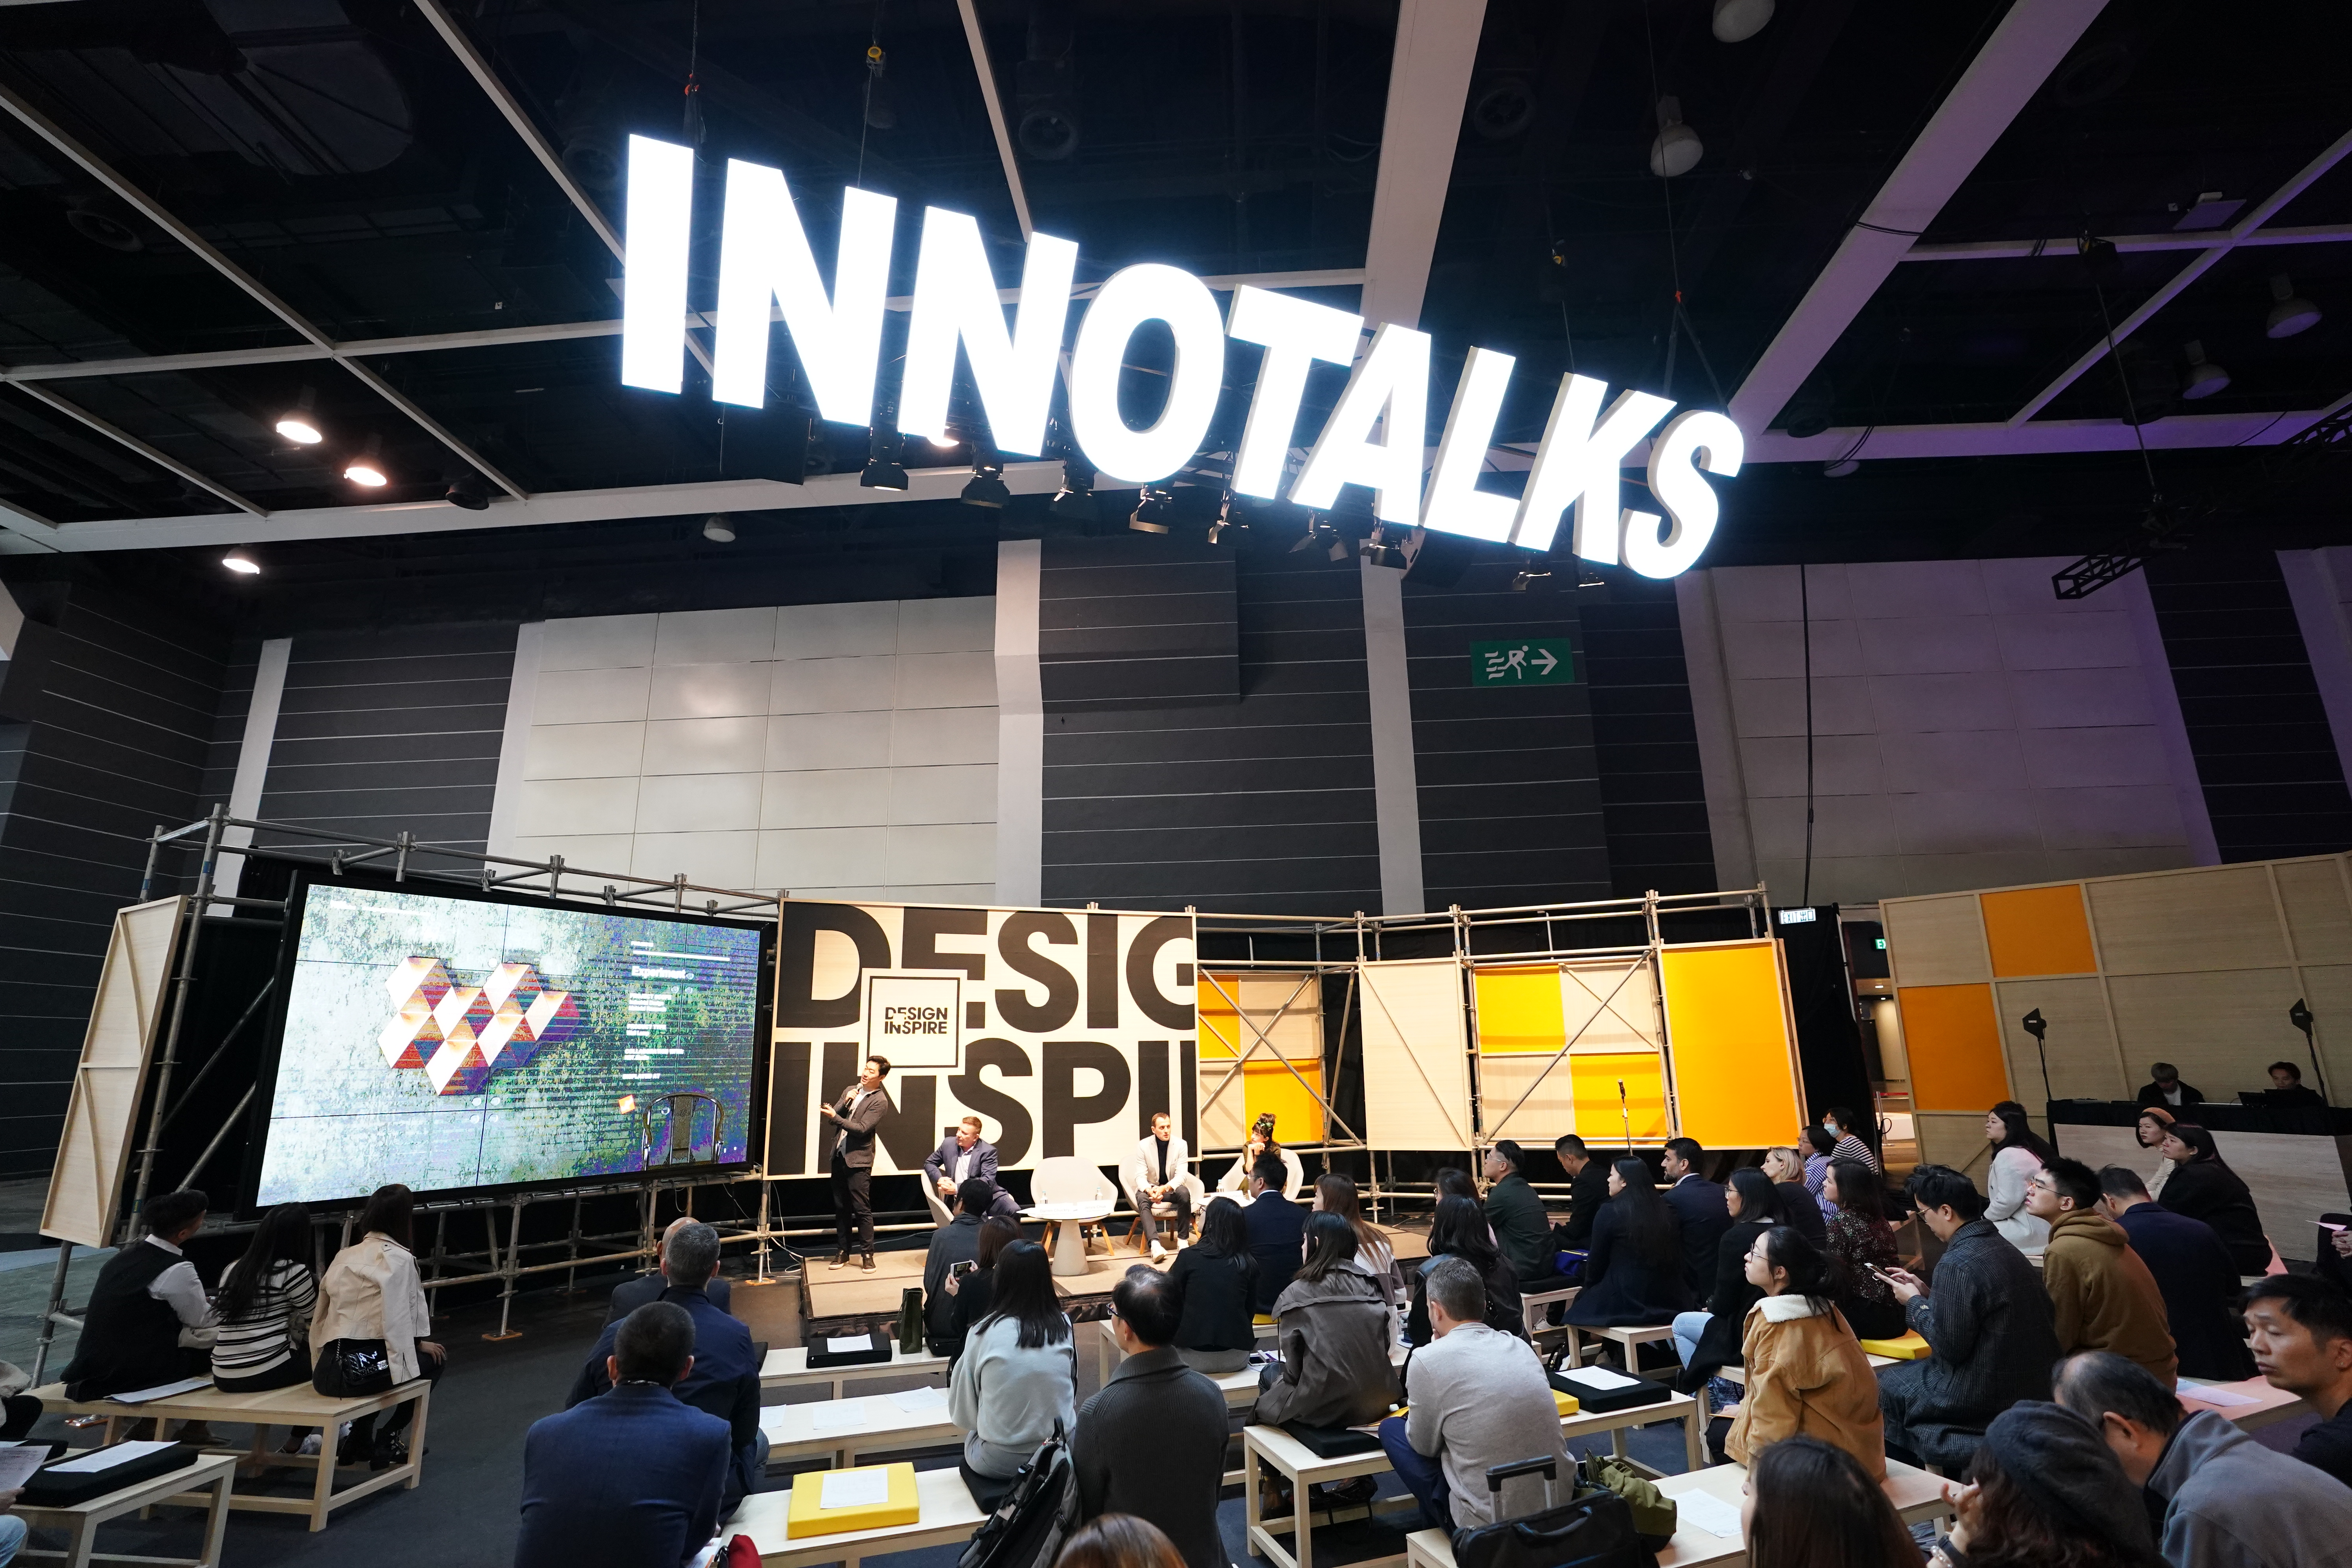 Design Inspire Innotalks Conference December 2020